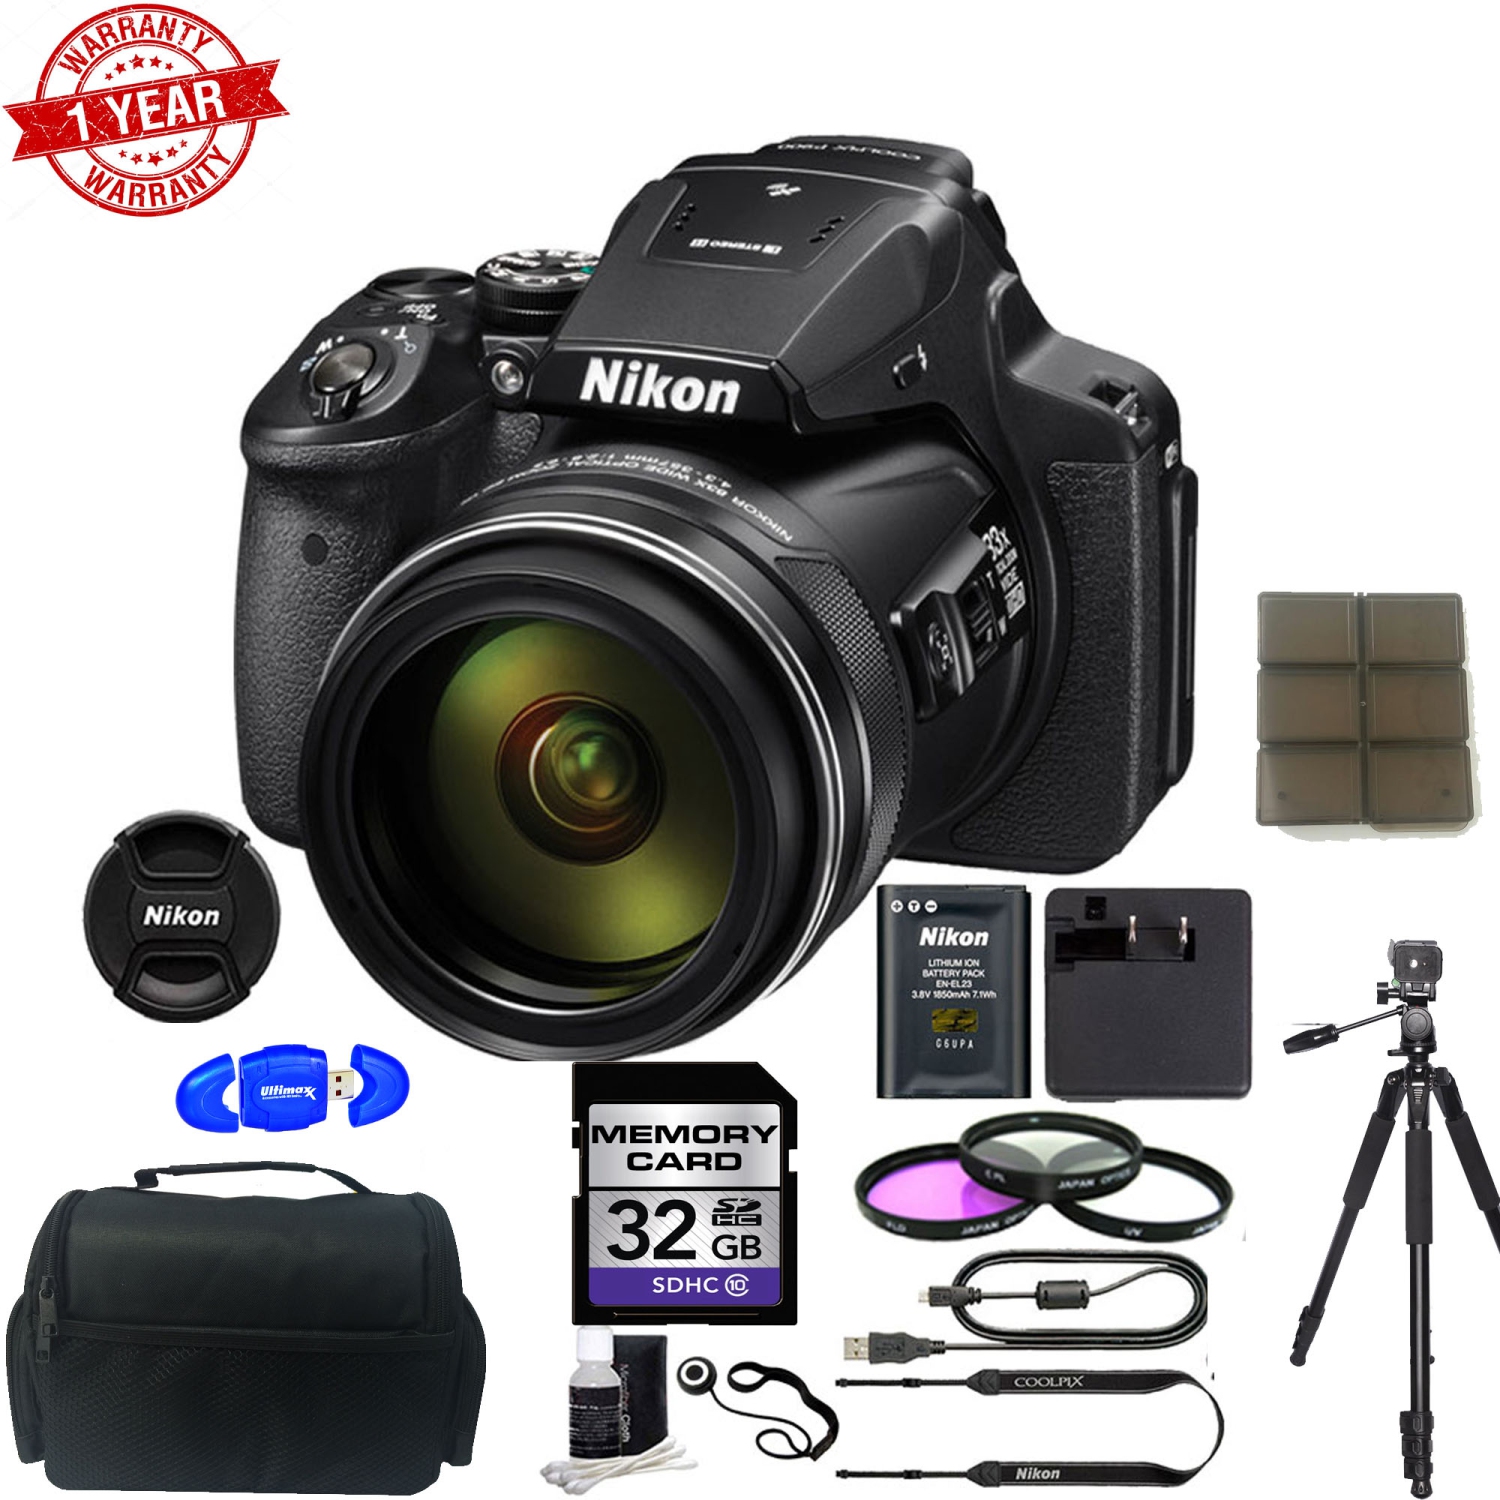 Nikon Coolpix P900 16.0 MP Compact Digital Camera- Black w/ 32GB MC | DSLR Bag | Tripod | Card Reader | Filters & Cleaning Kit - US Version w/ Seller Warranty